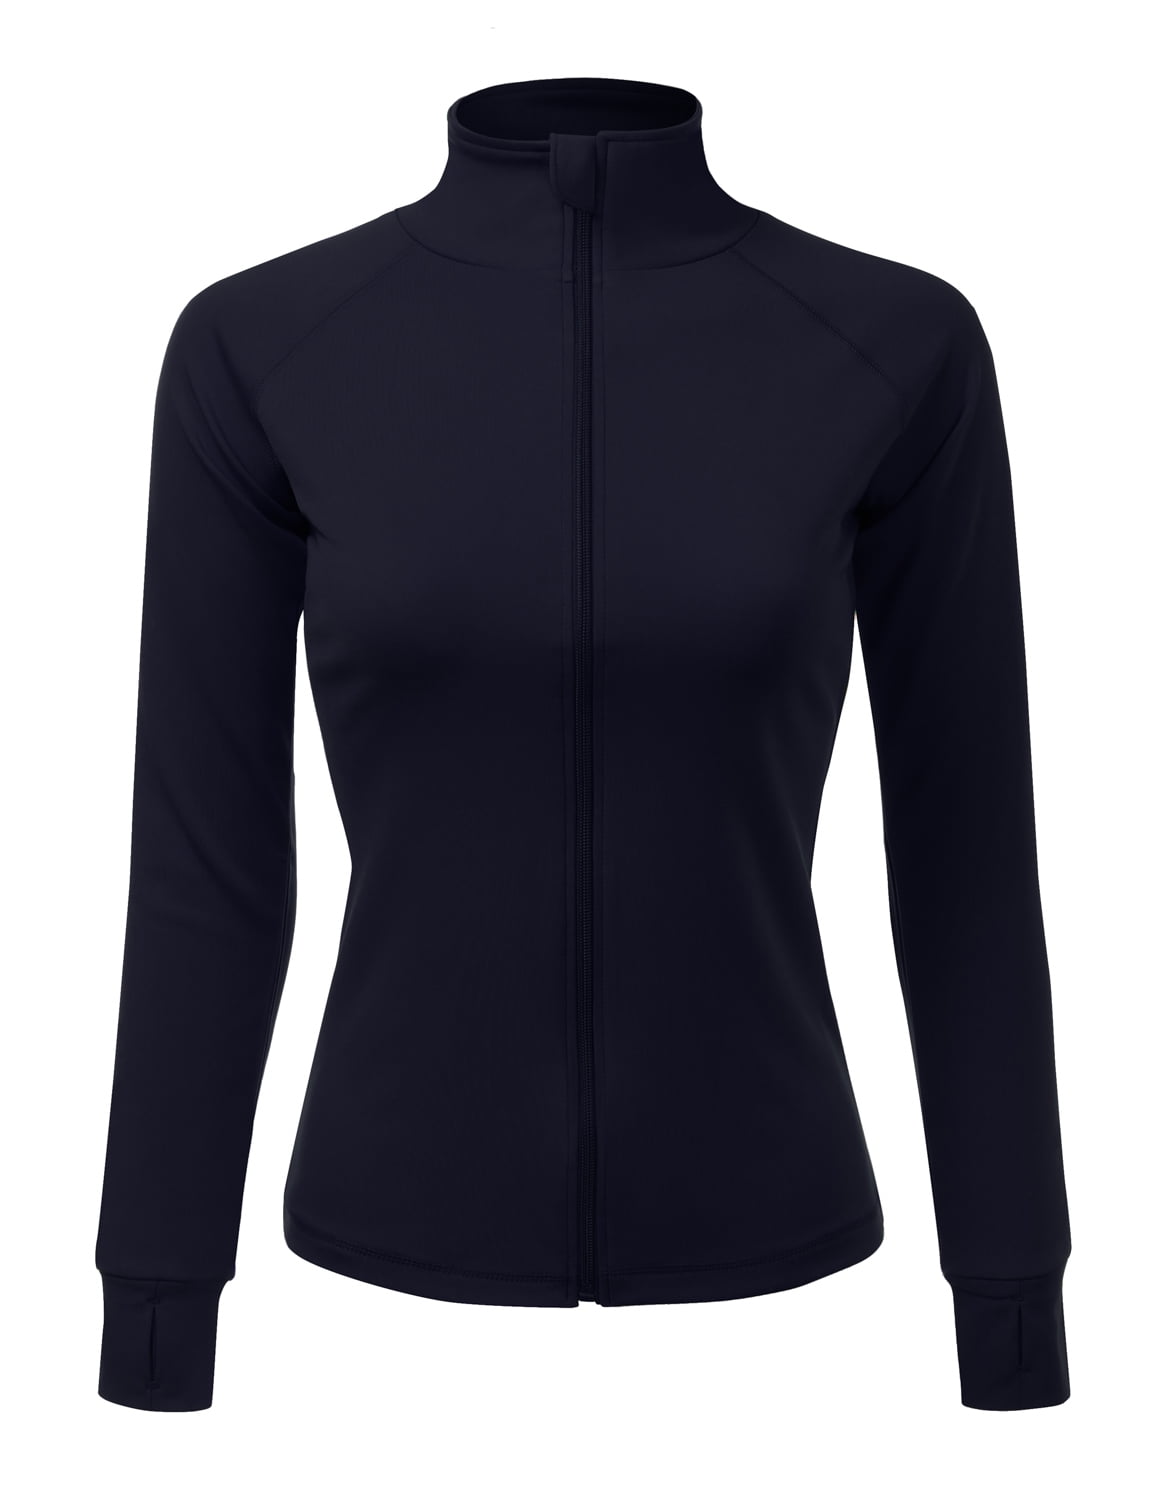 Womens Jacket Zip Up Fleece Jacket with Thumb Holes,Slim Fit Ultra Soft Workout Jacket Lightweight Yoga Sweatshirt 